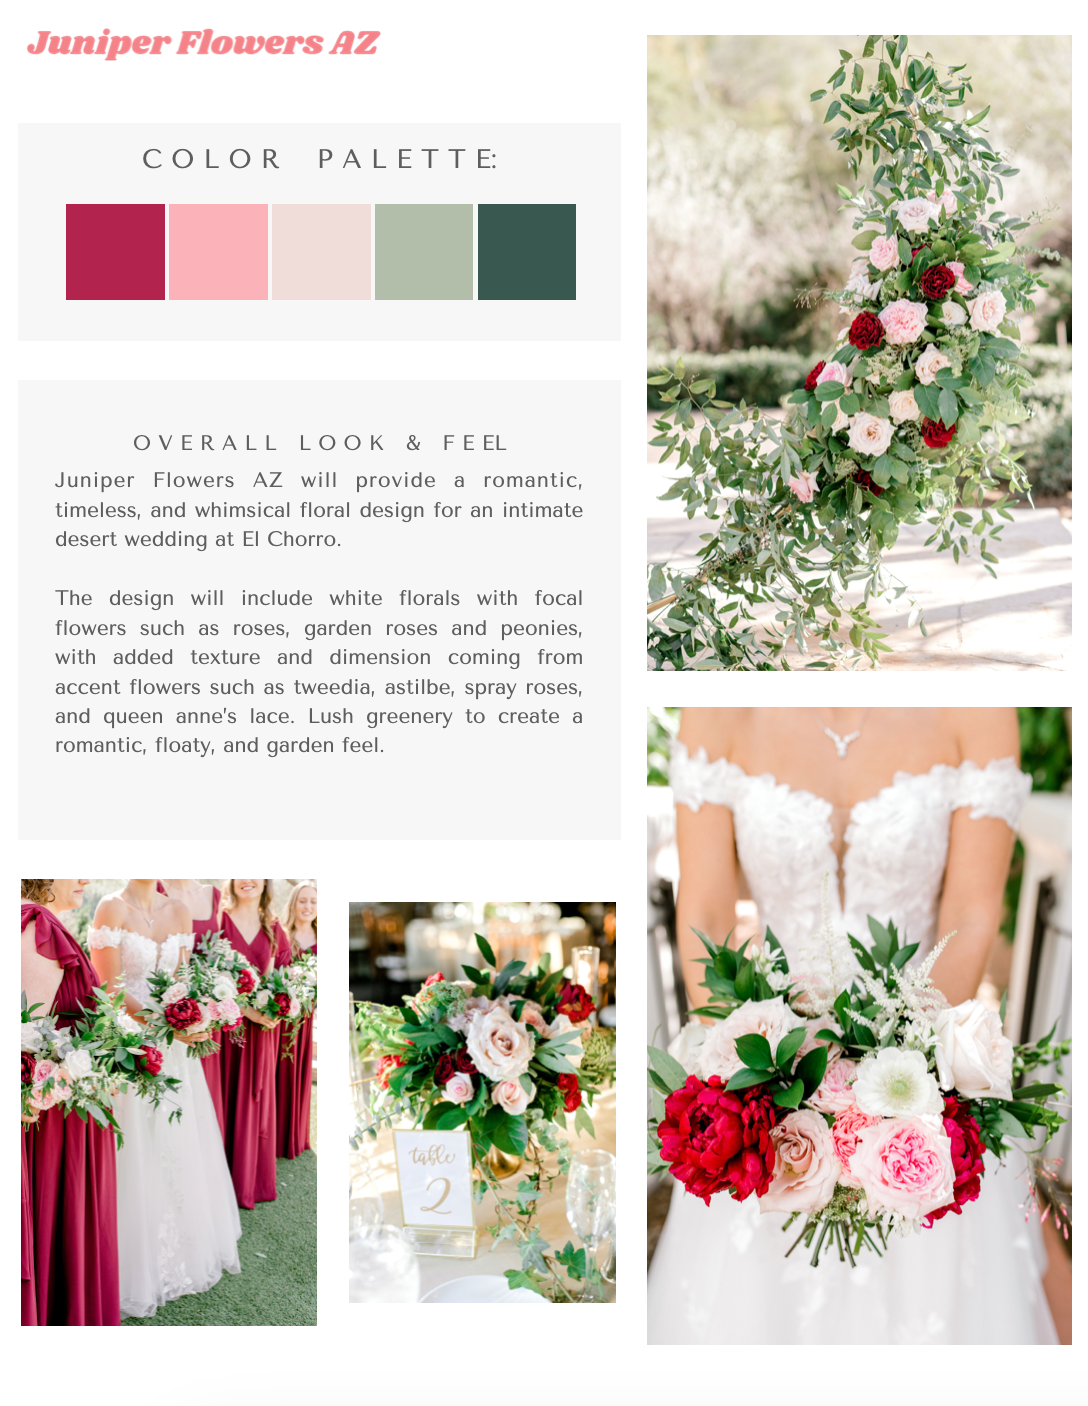 Florist's wedding design proposal with burgundy, pink, and sage green color palette